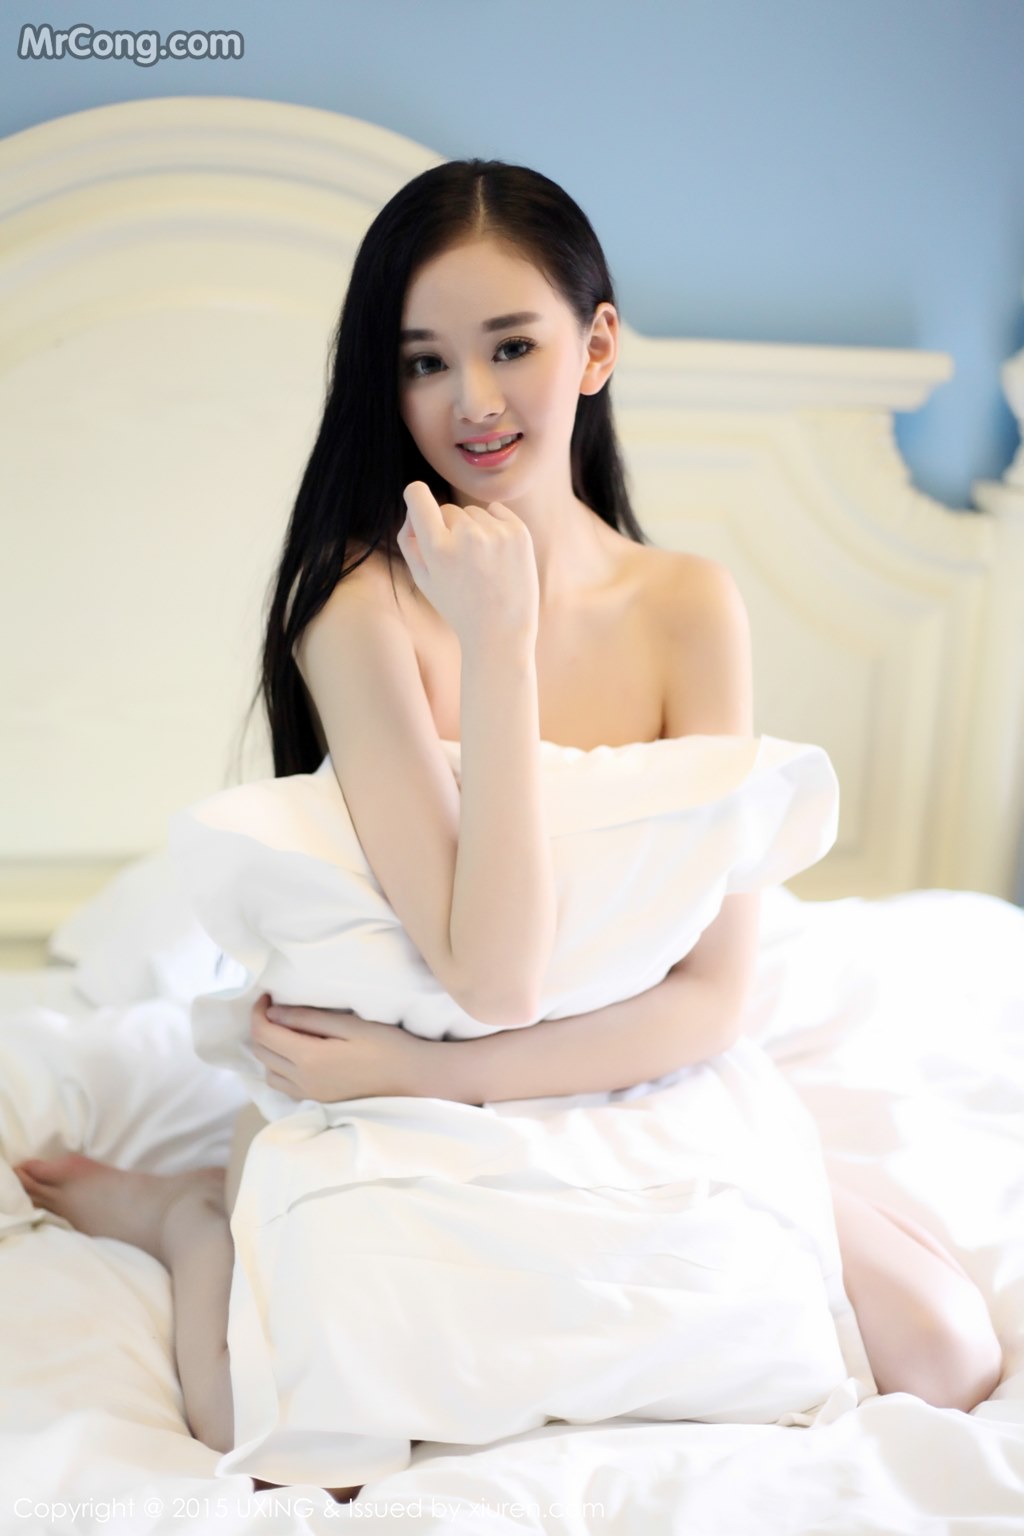 UXING Vol.029: Model Wen Xin Baby (温馨 baby) (50 photos) photo 2-17